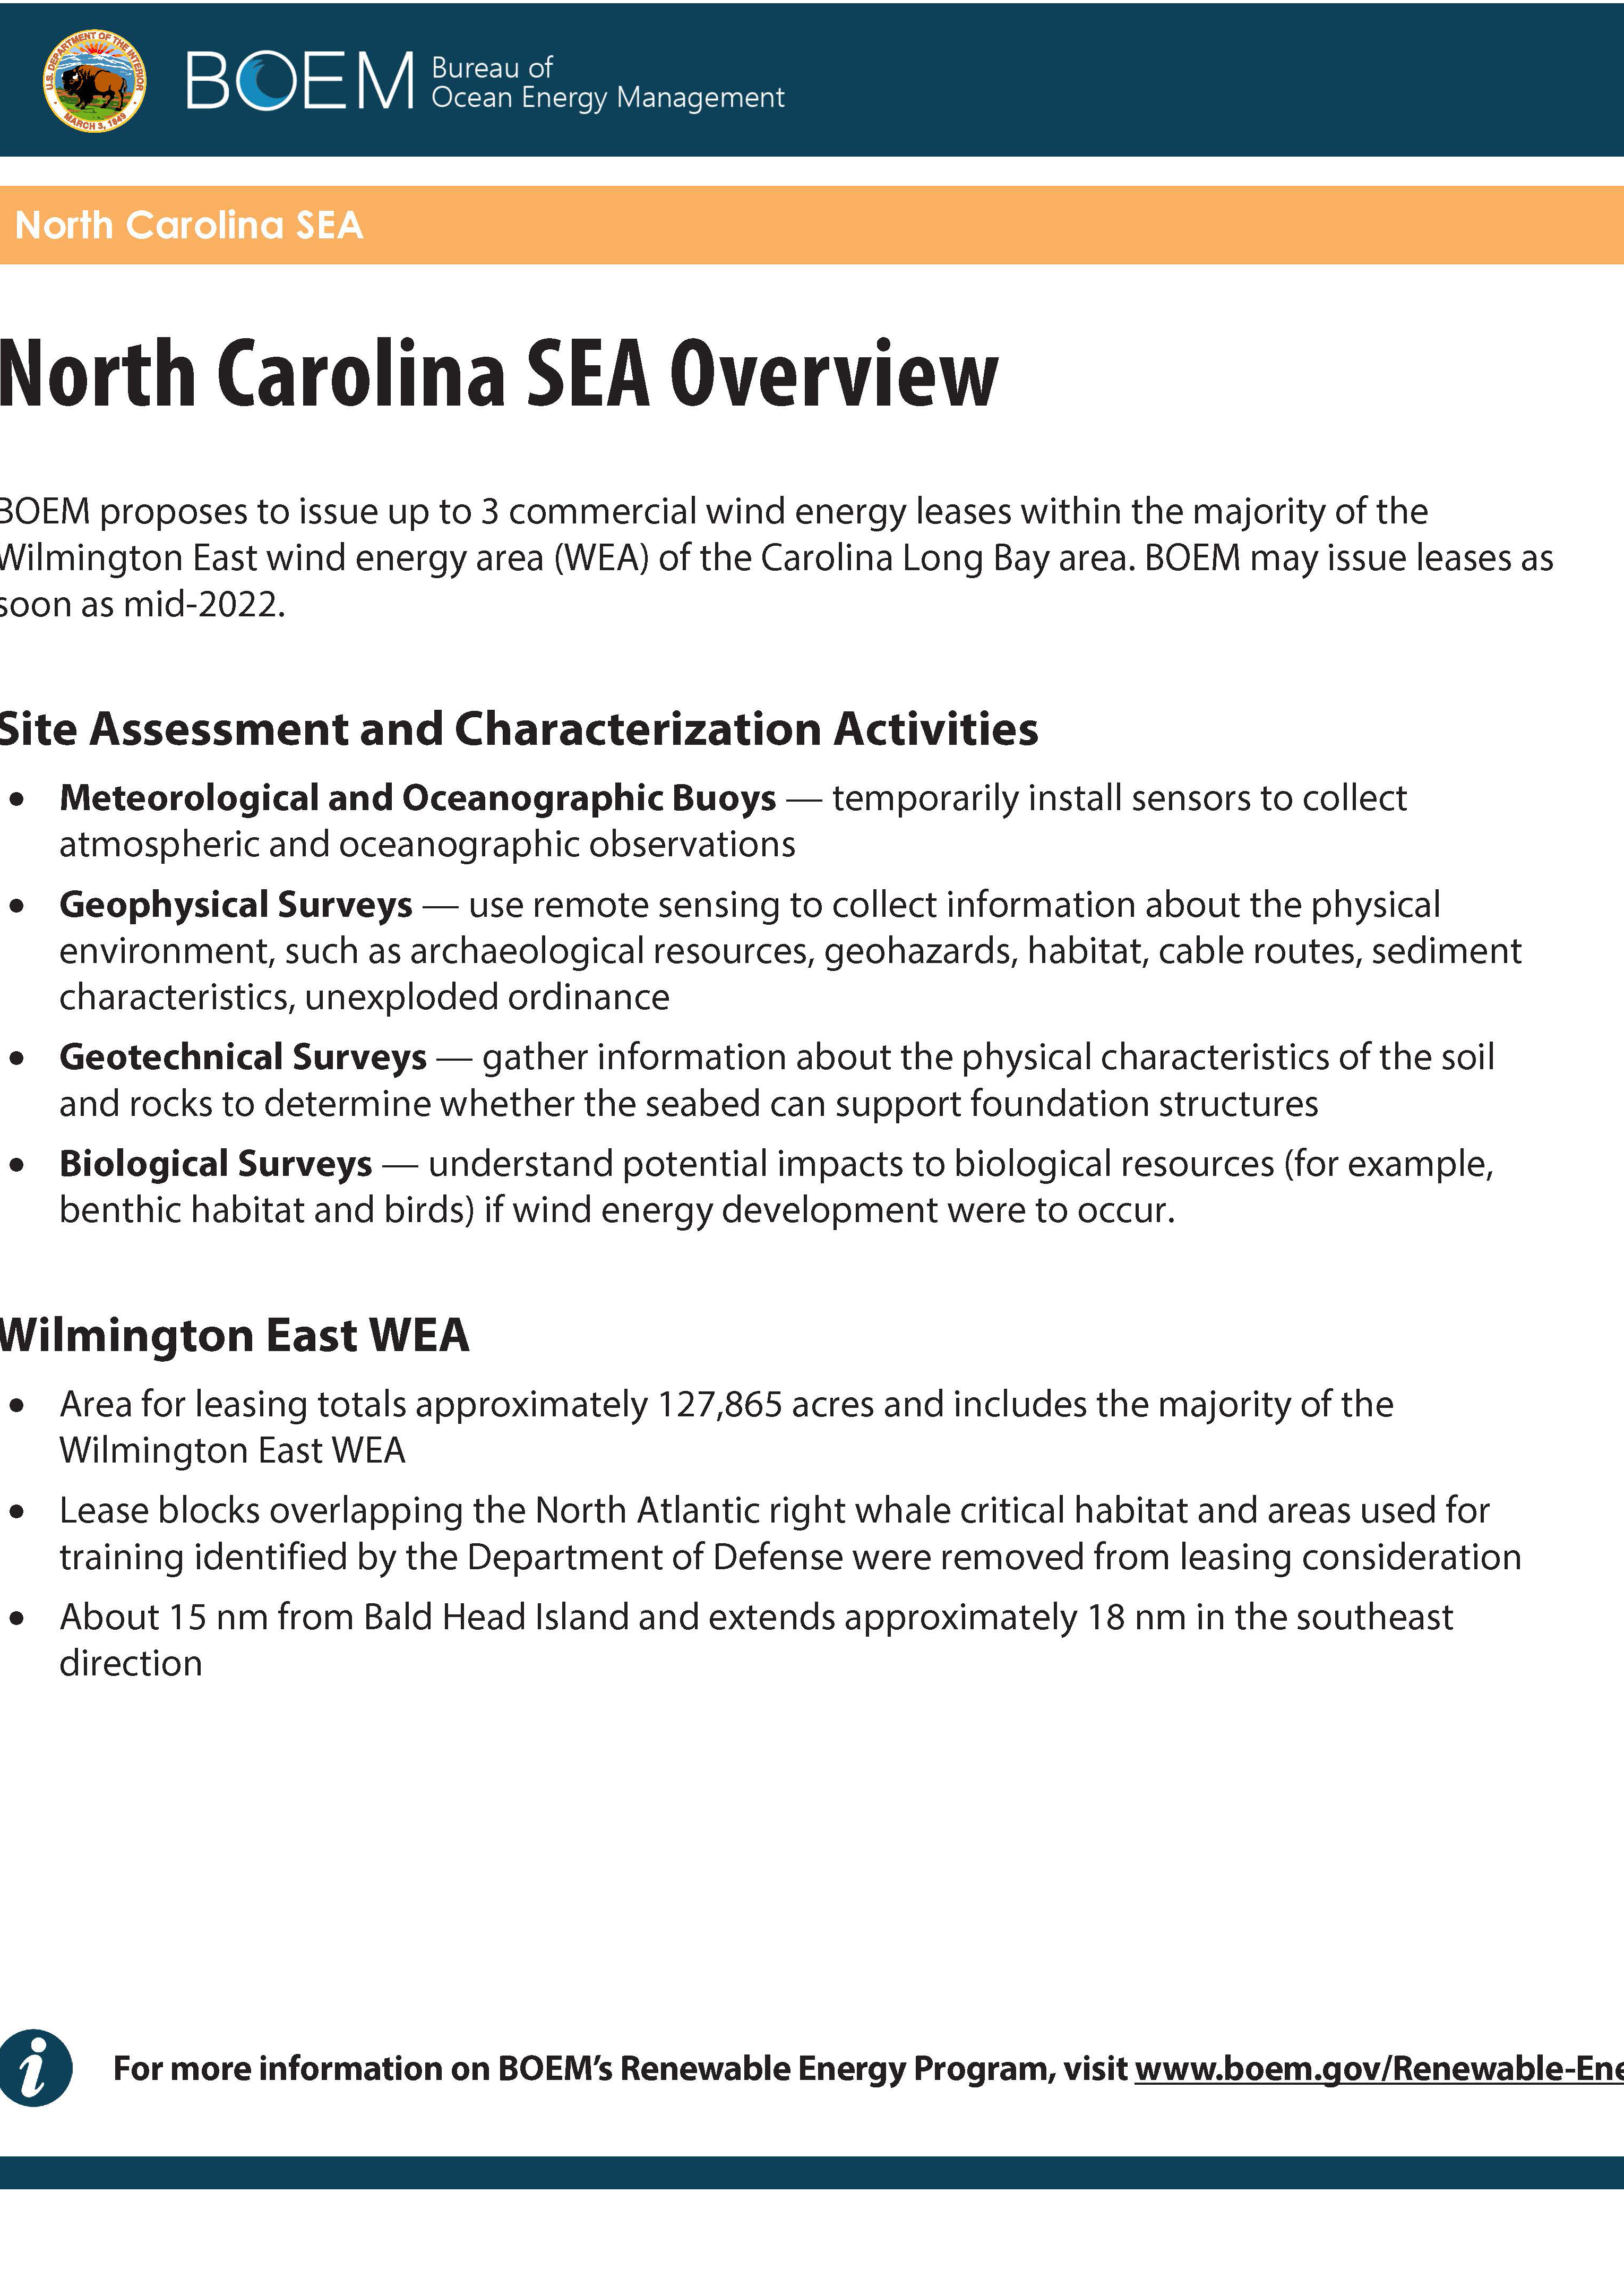 North Carolina Sea Overview